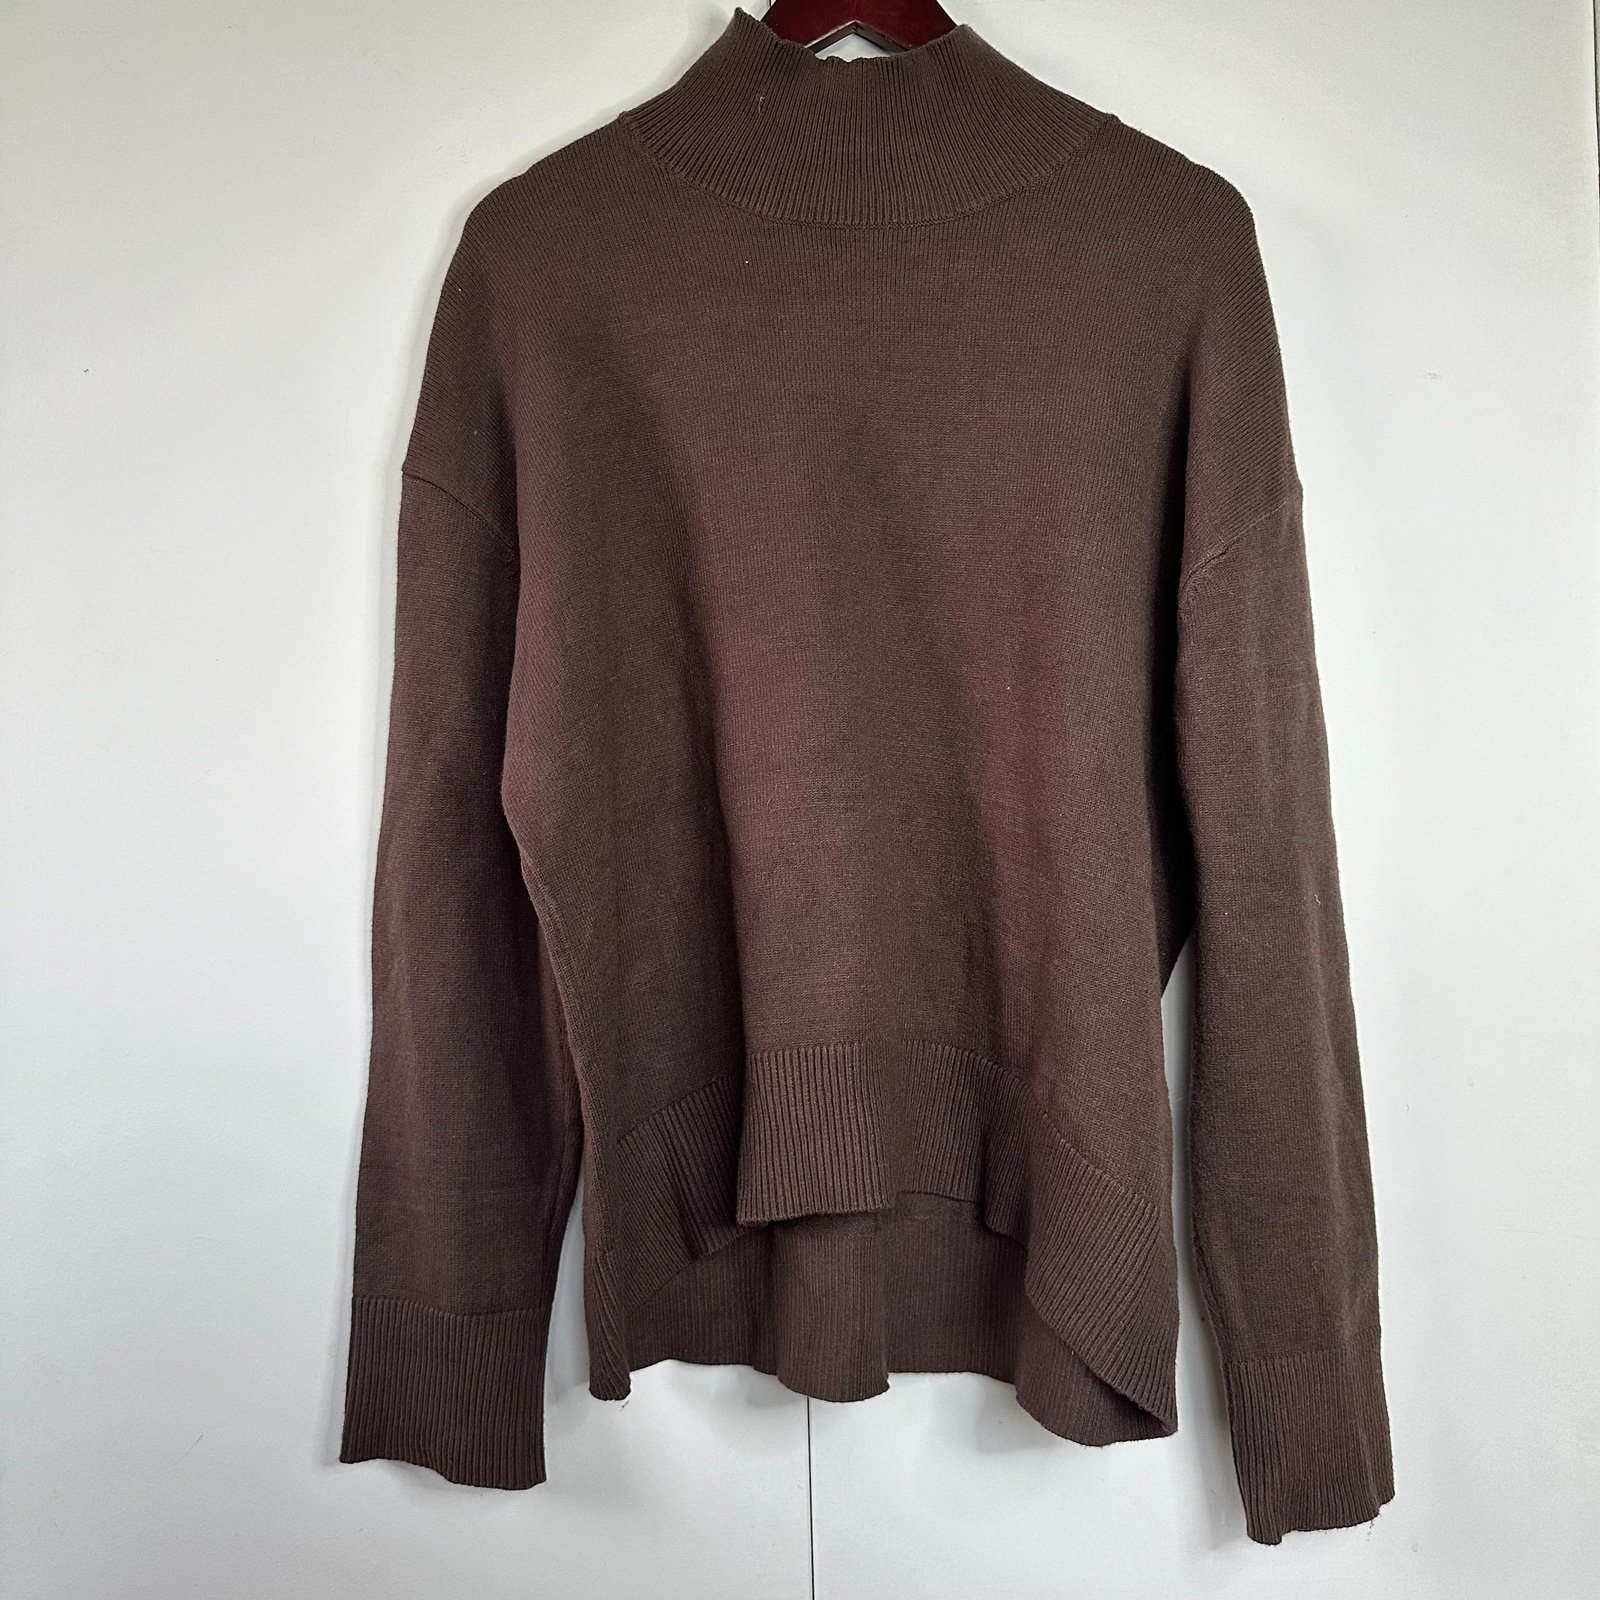 the Lowest price Oak + Fort Mock Neck Brown Sweater jTU